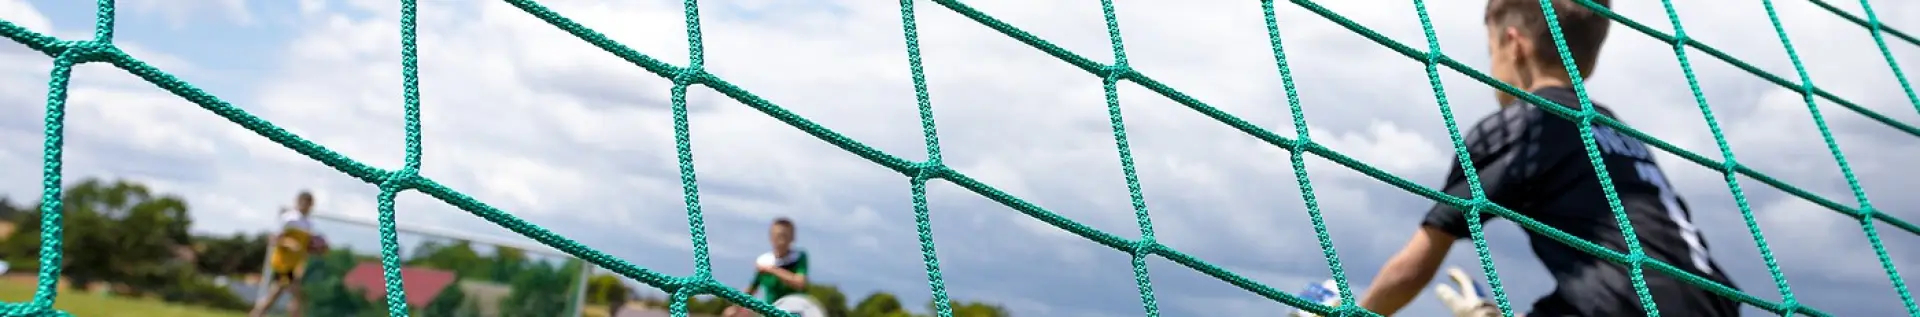 Green tennis court fencing net - Cod. RE0303